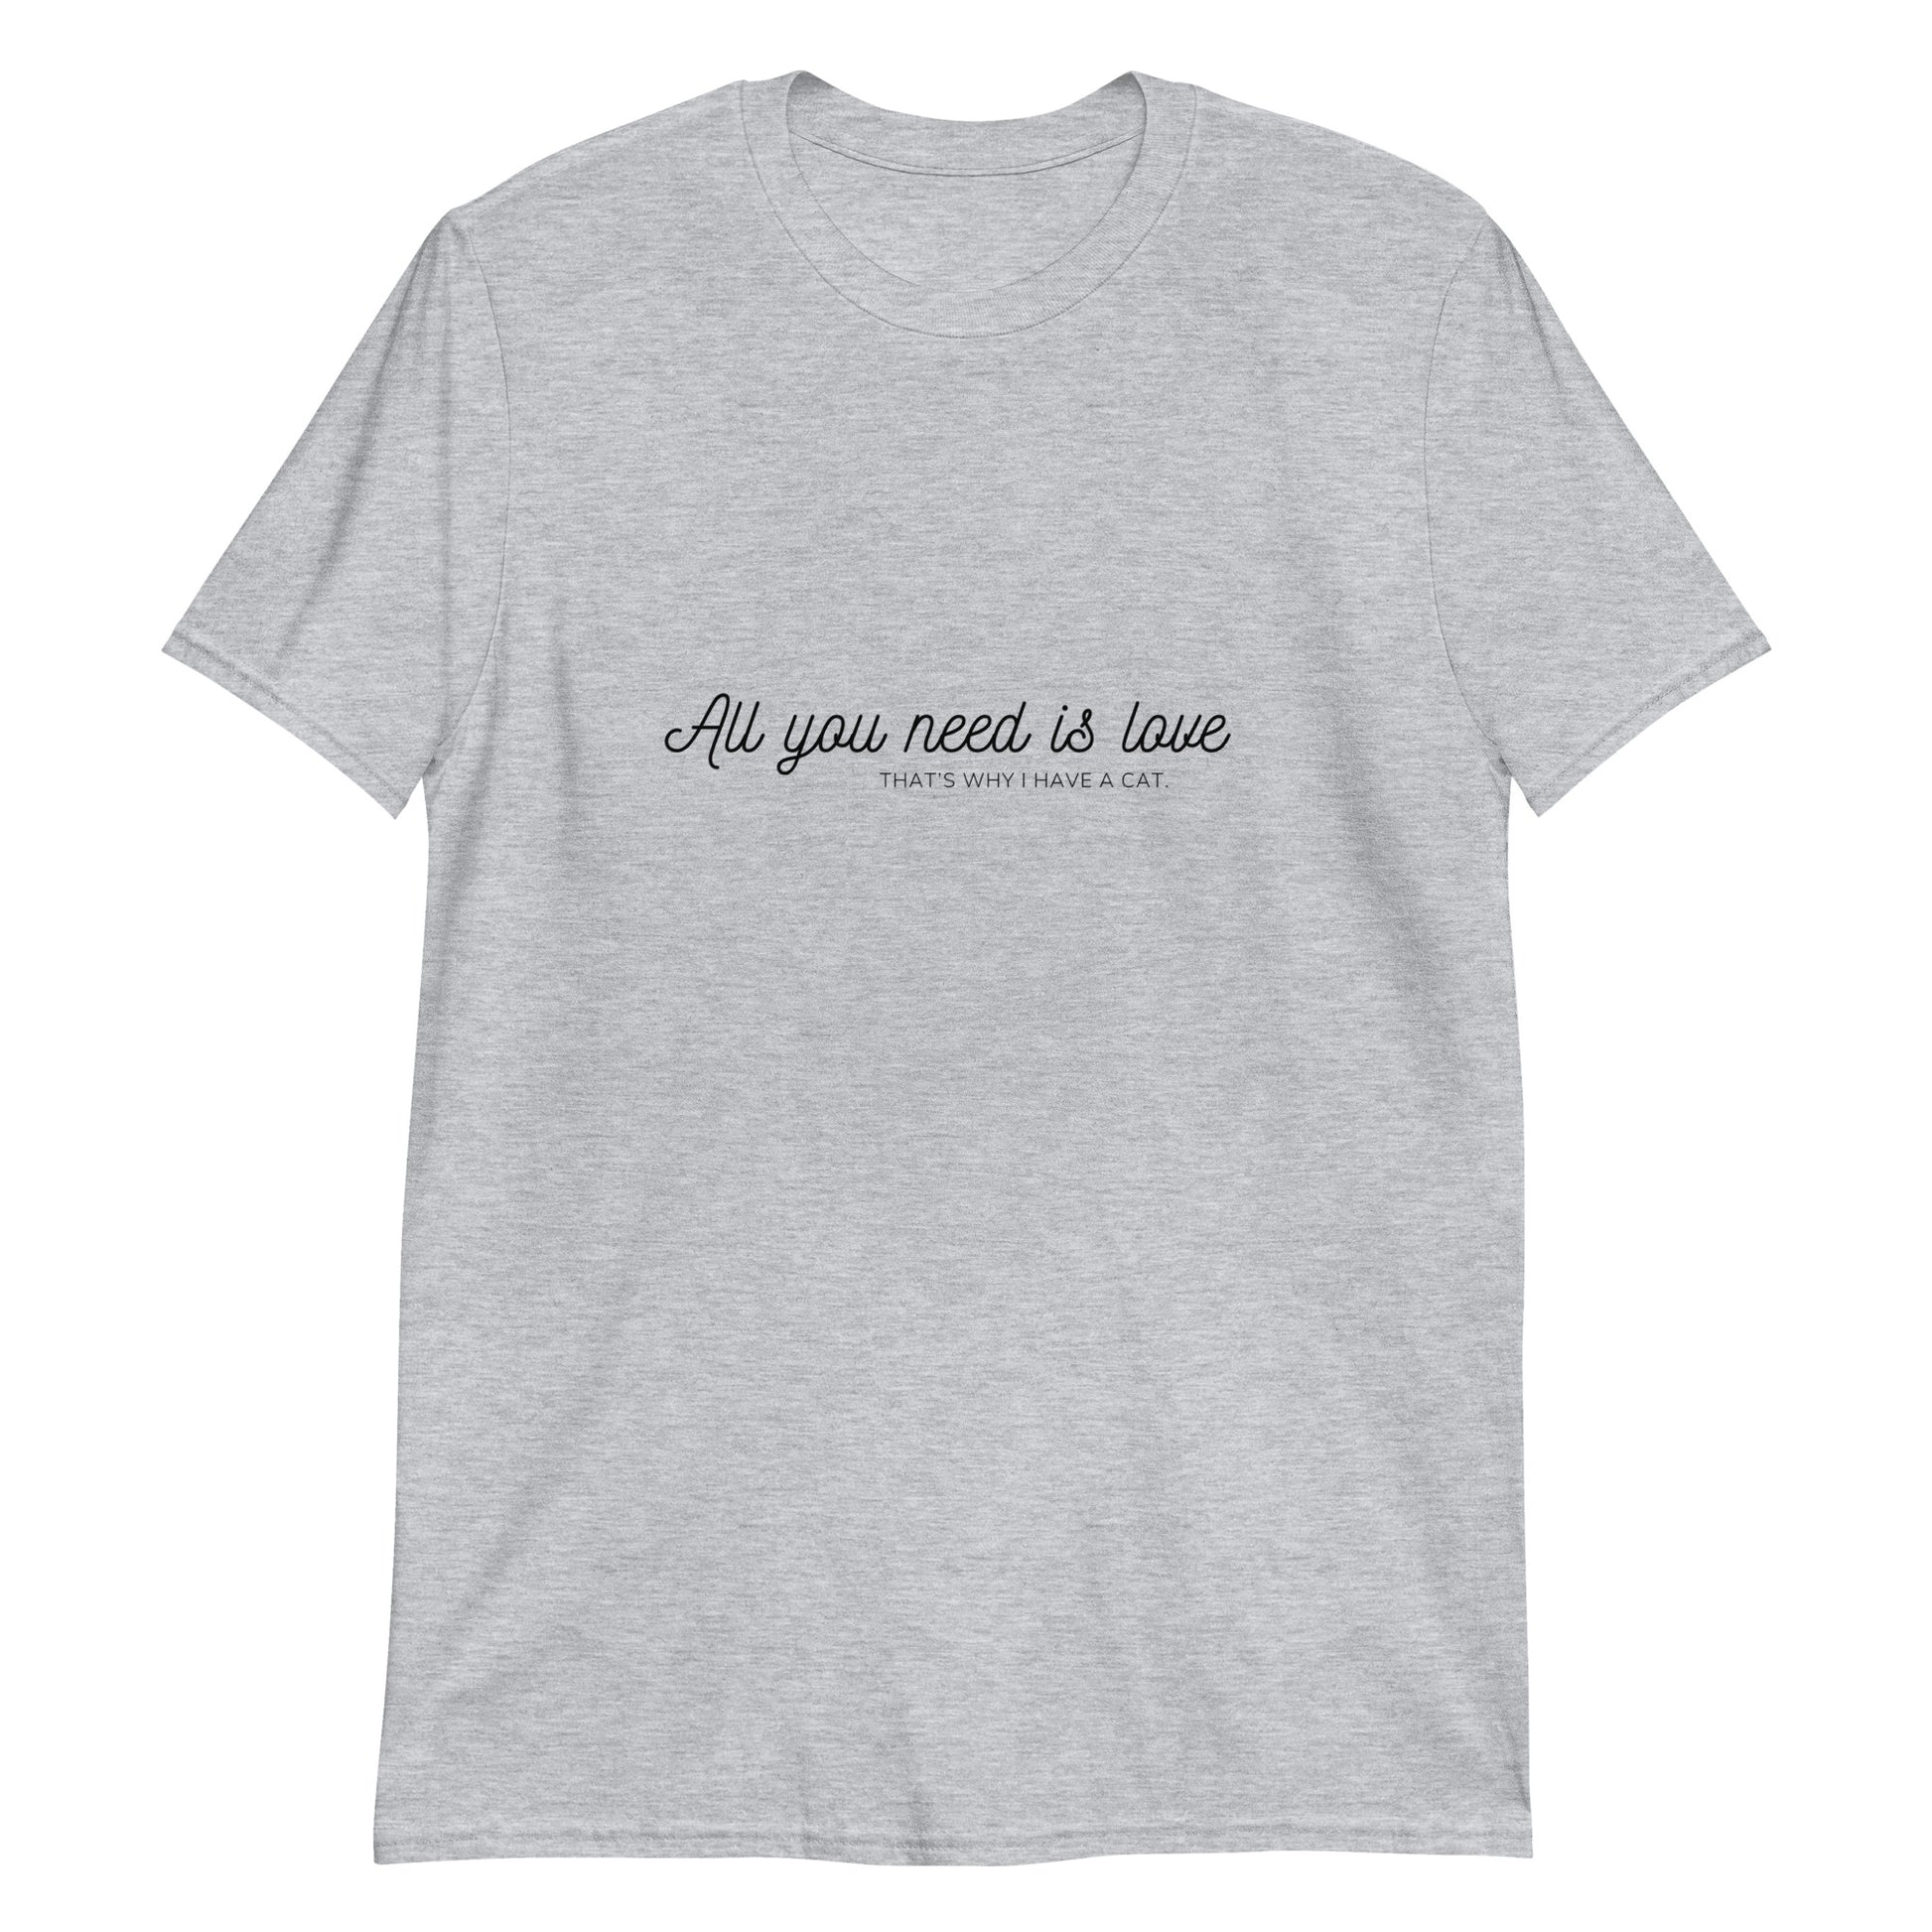 sklep dla kociary t-shirt all you need is love szary 7